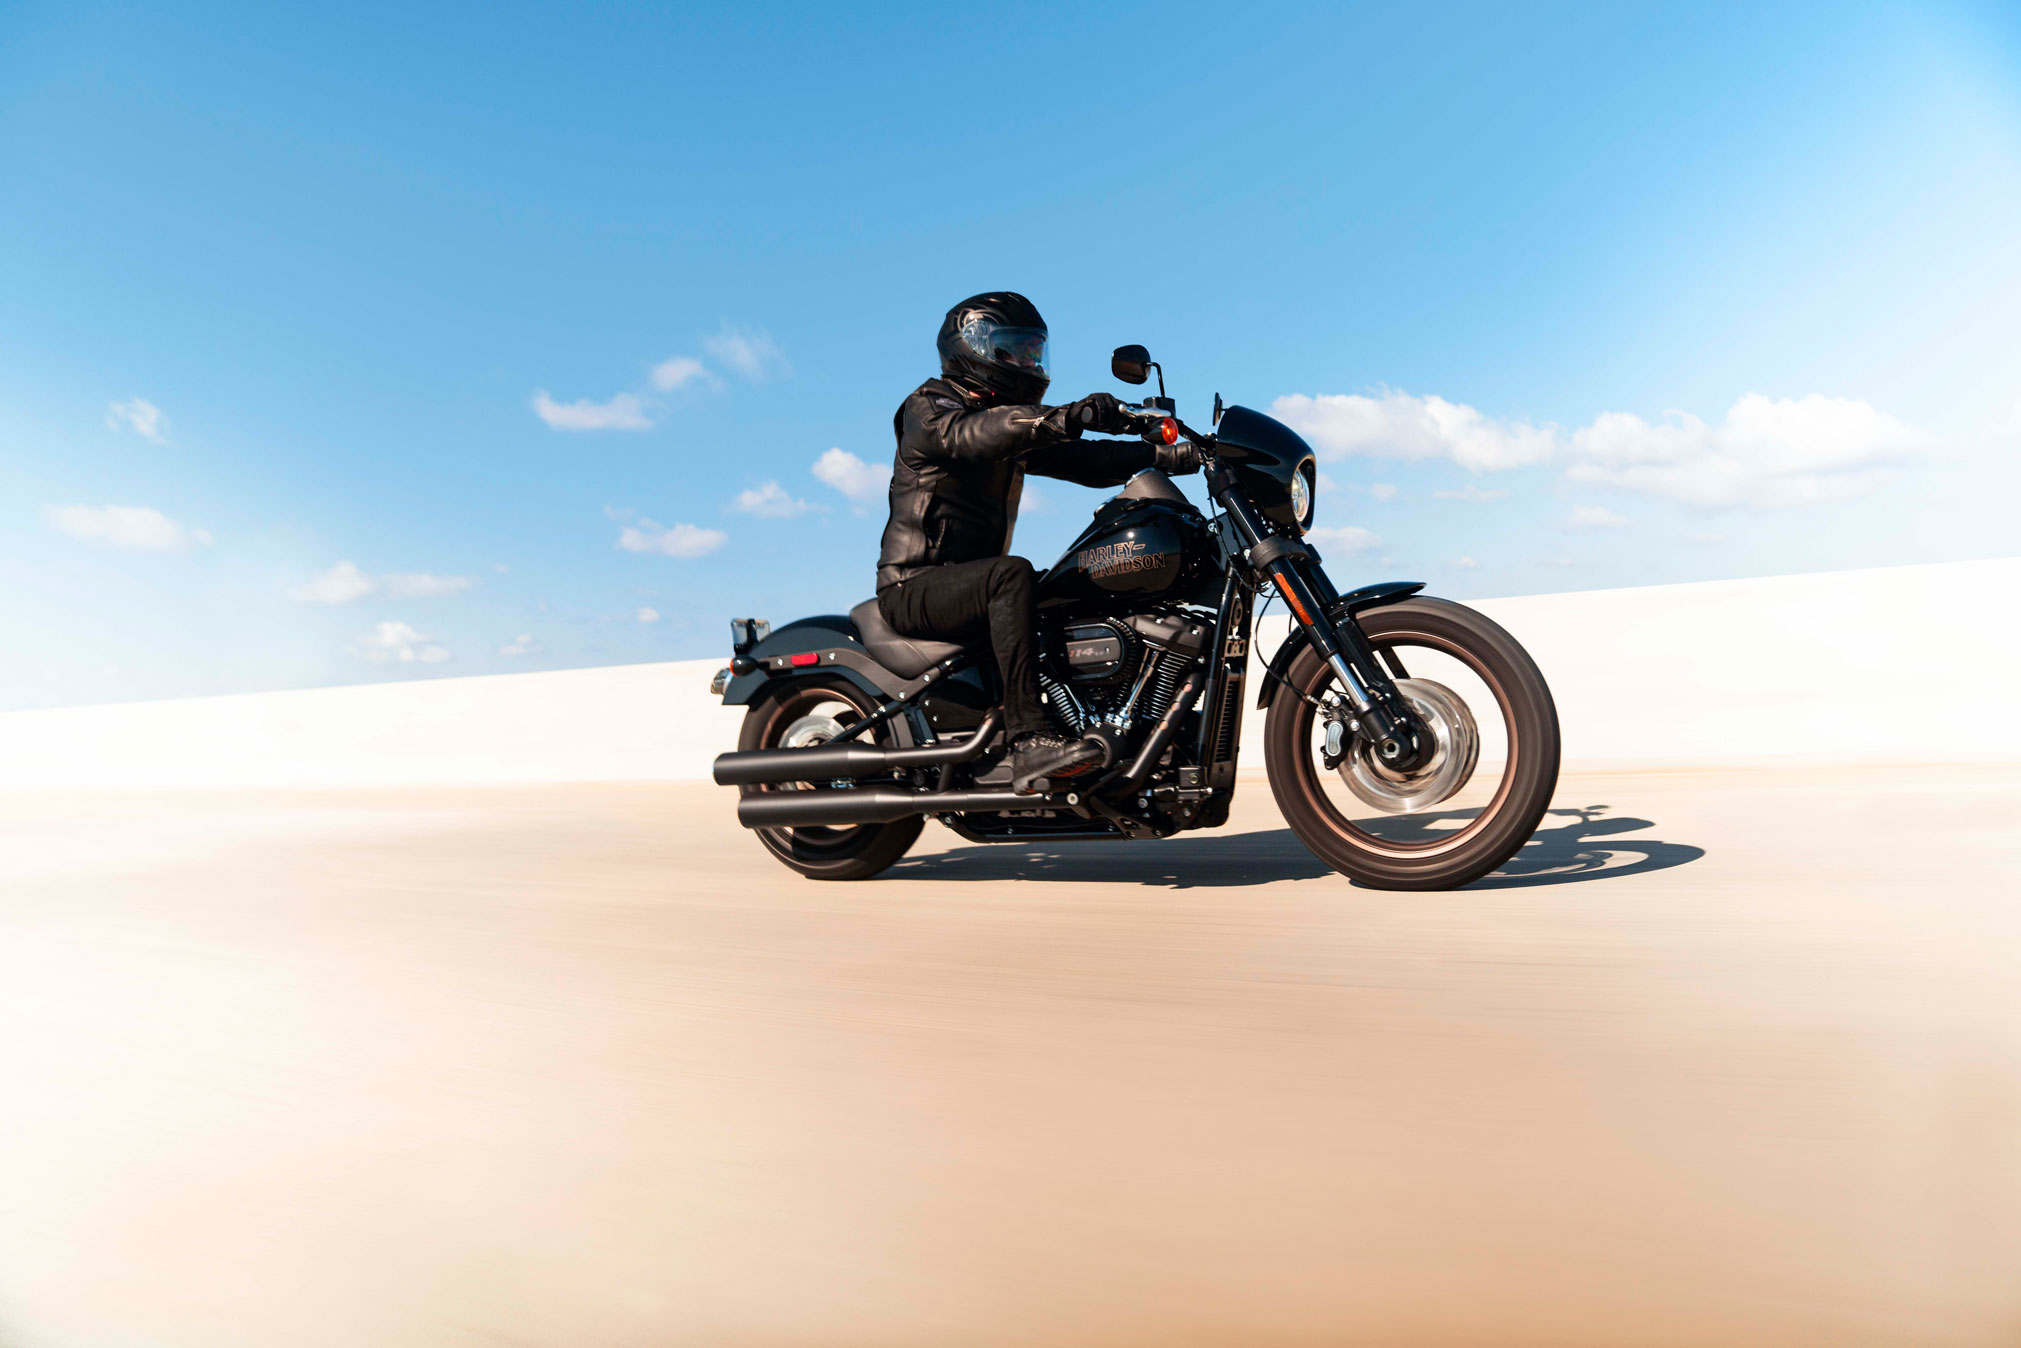 2021 Harley-Davidson Motorcycle Guide • Total Motorcycle